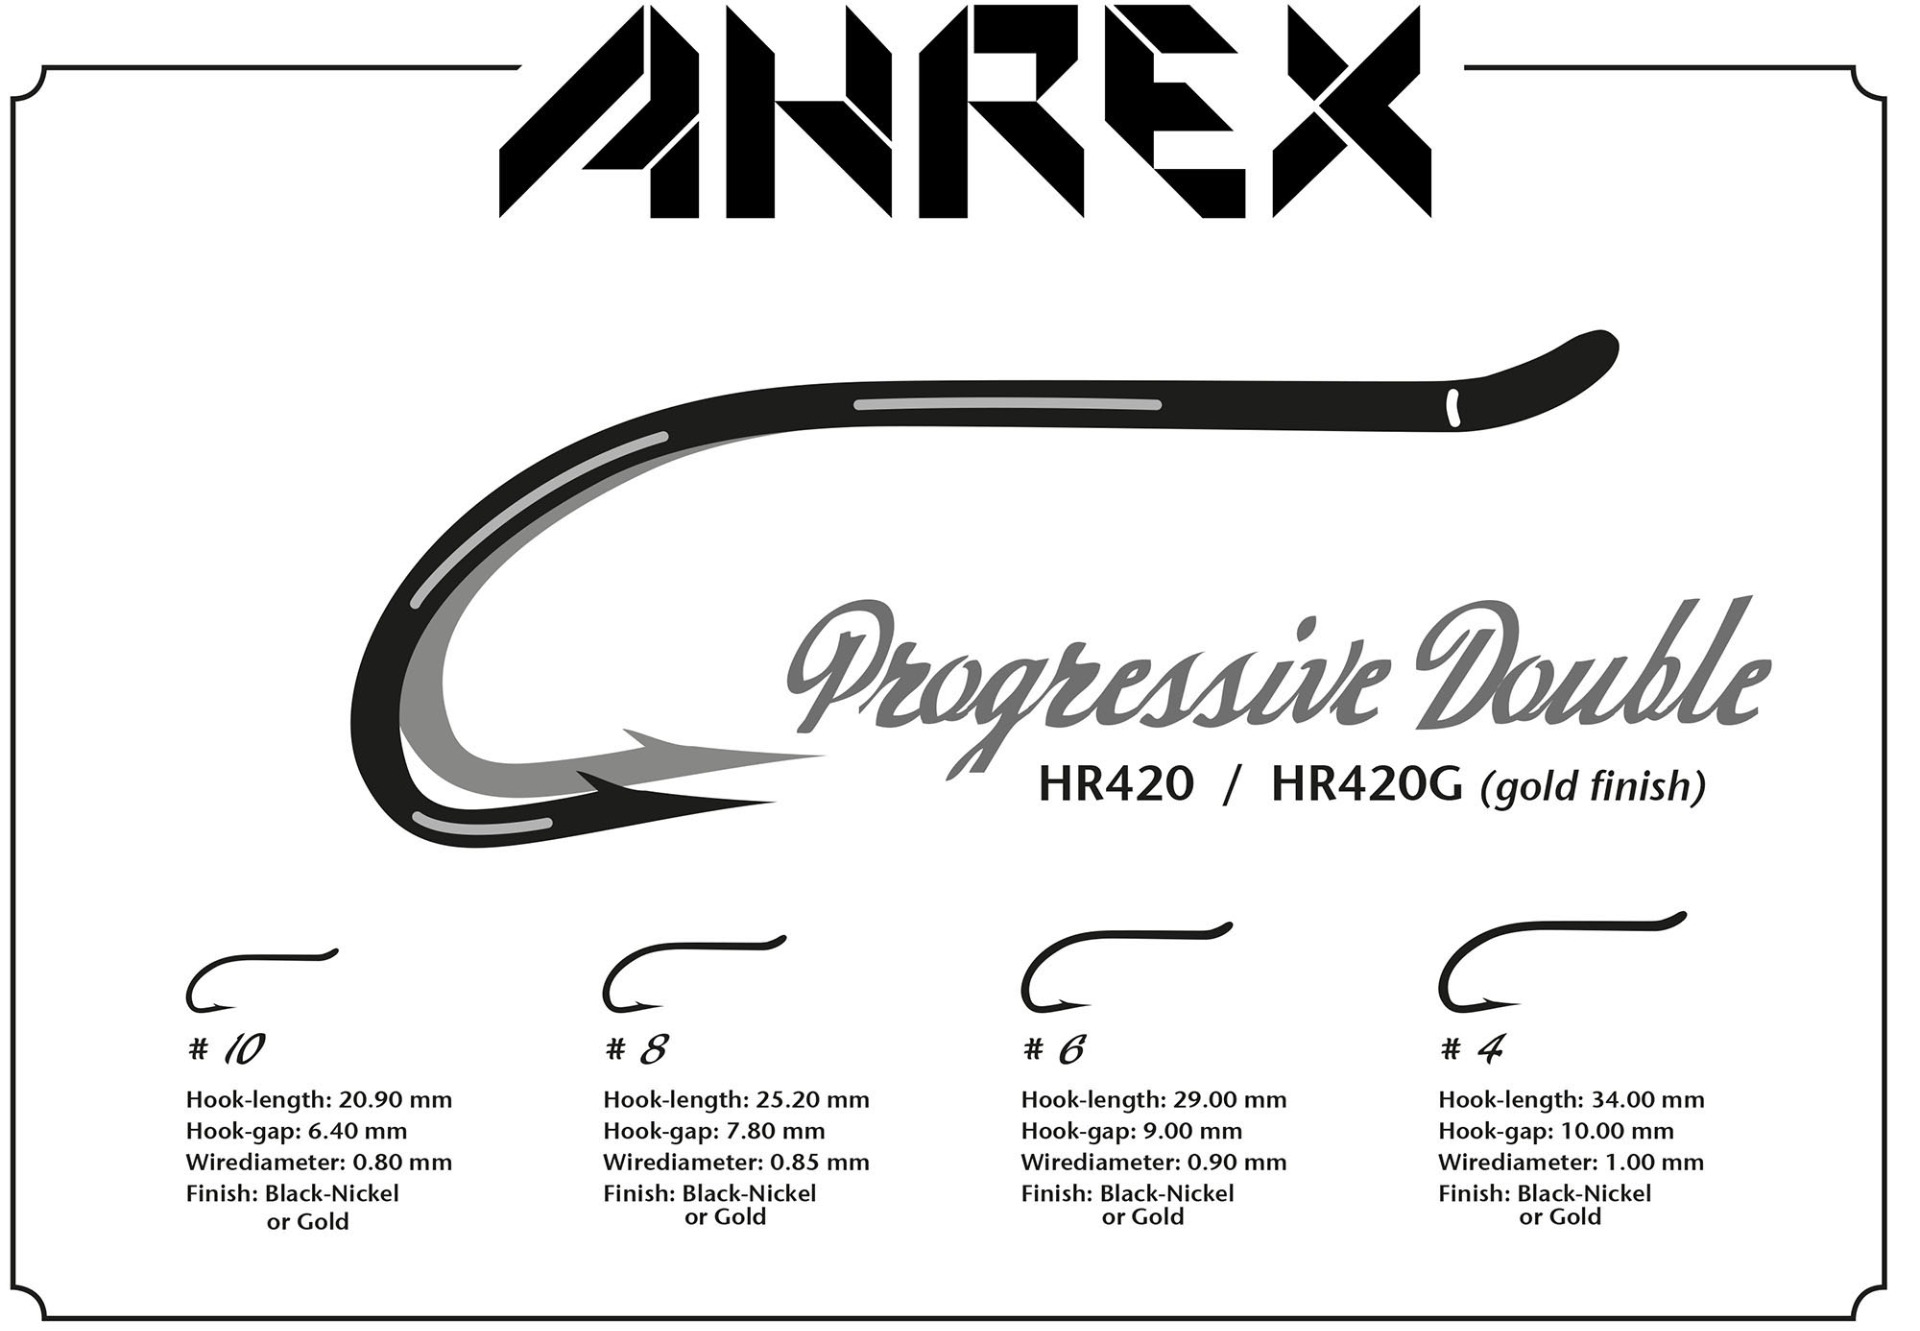 Ahrex Progressive Double Gold #6